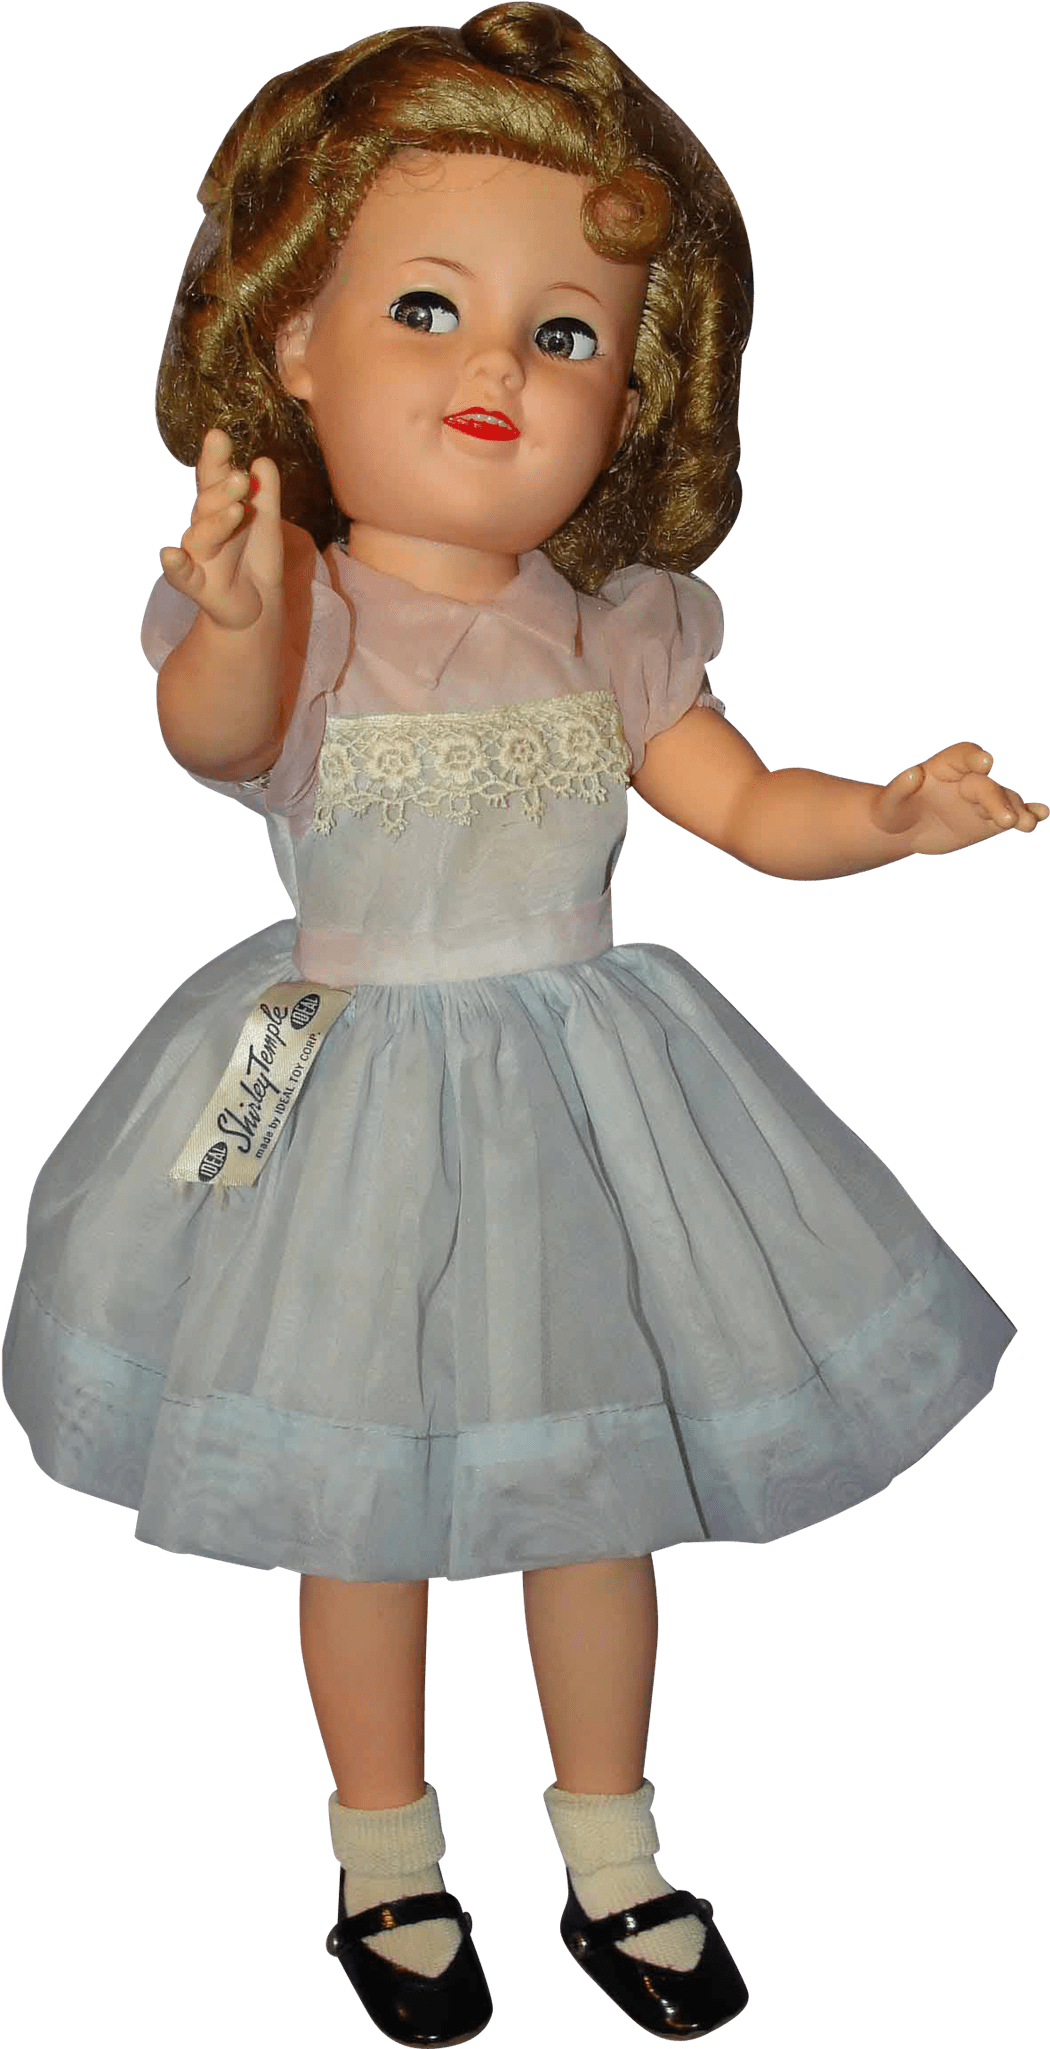 A Doll In A Dress